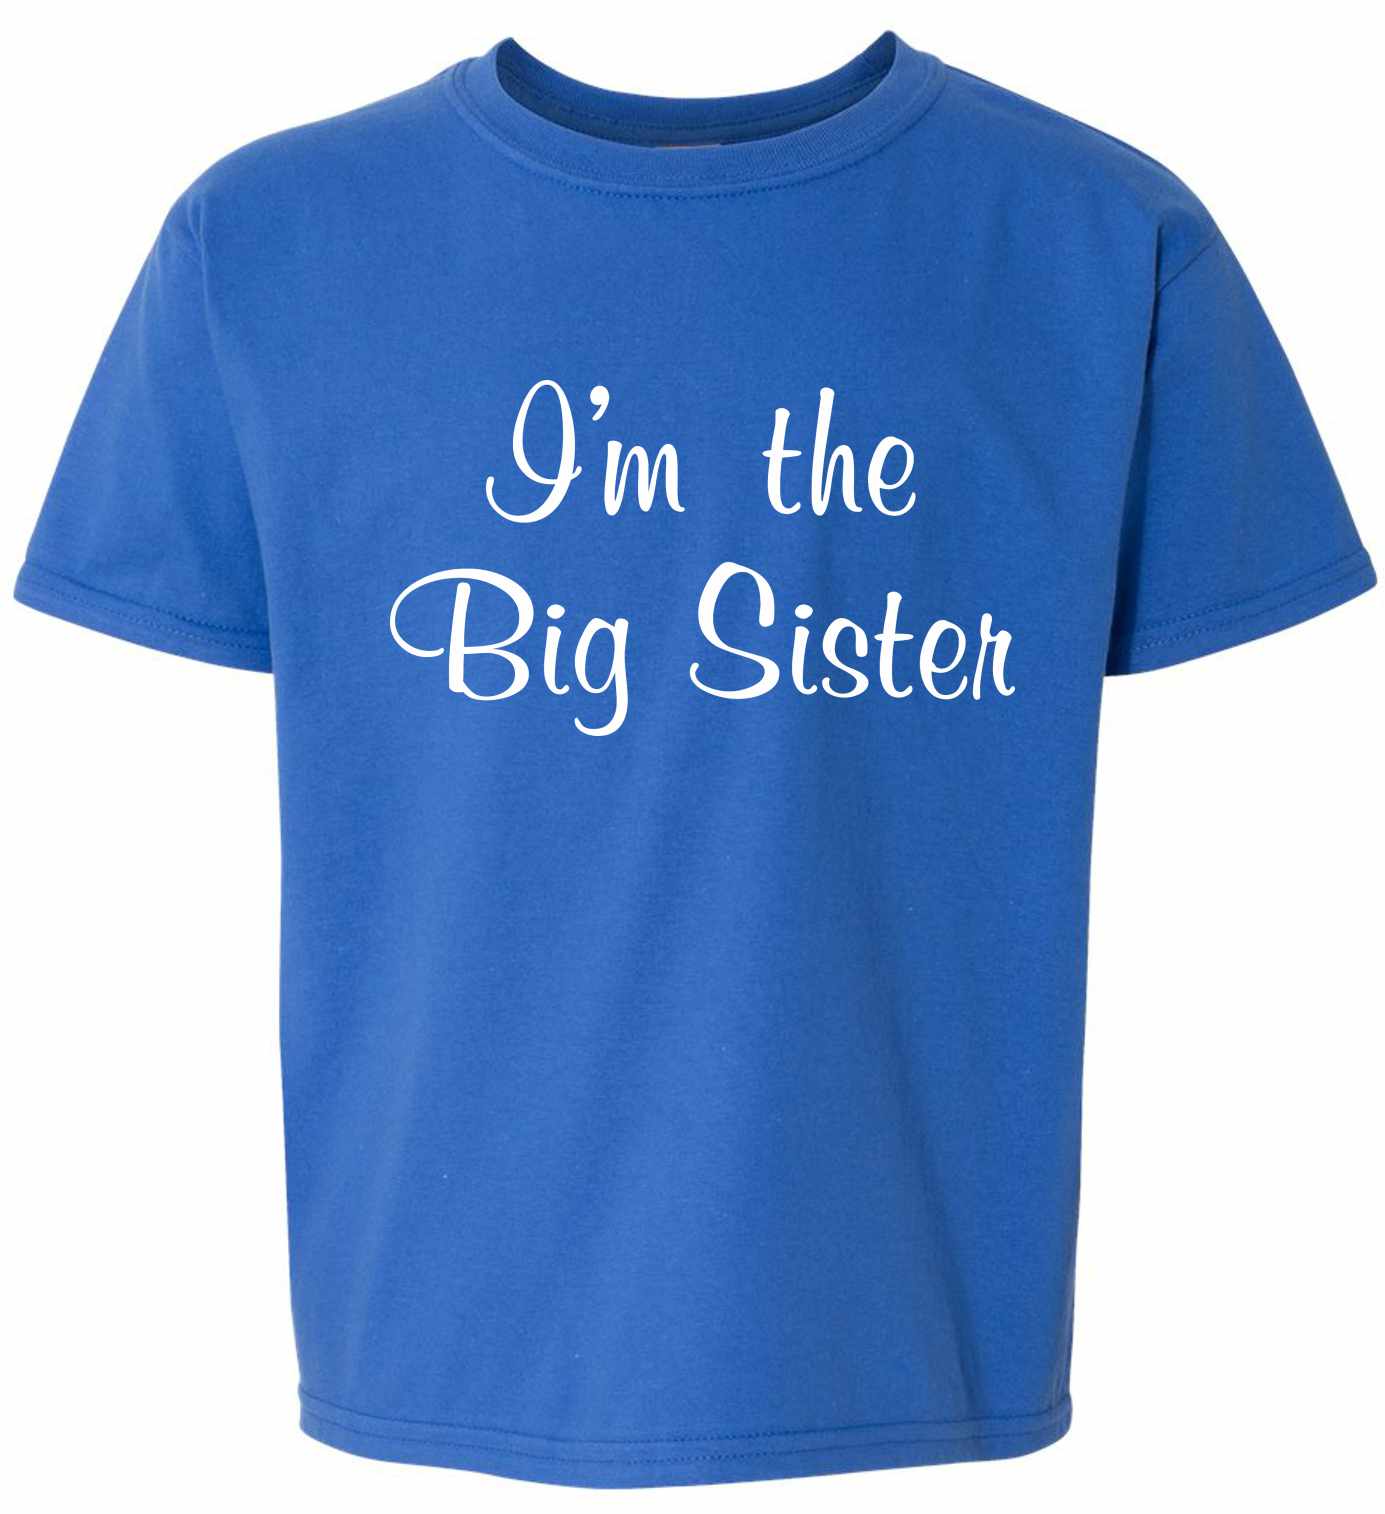 I'm the Big Sister on Kids T-Shirt